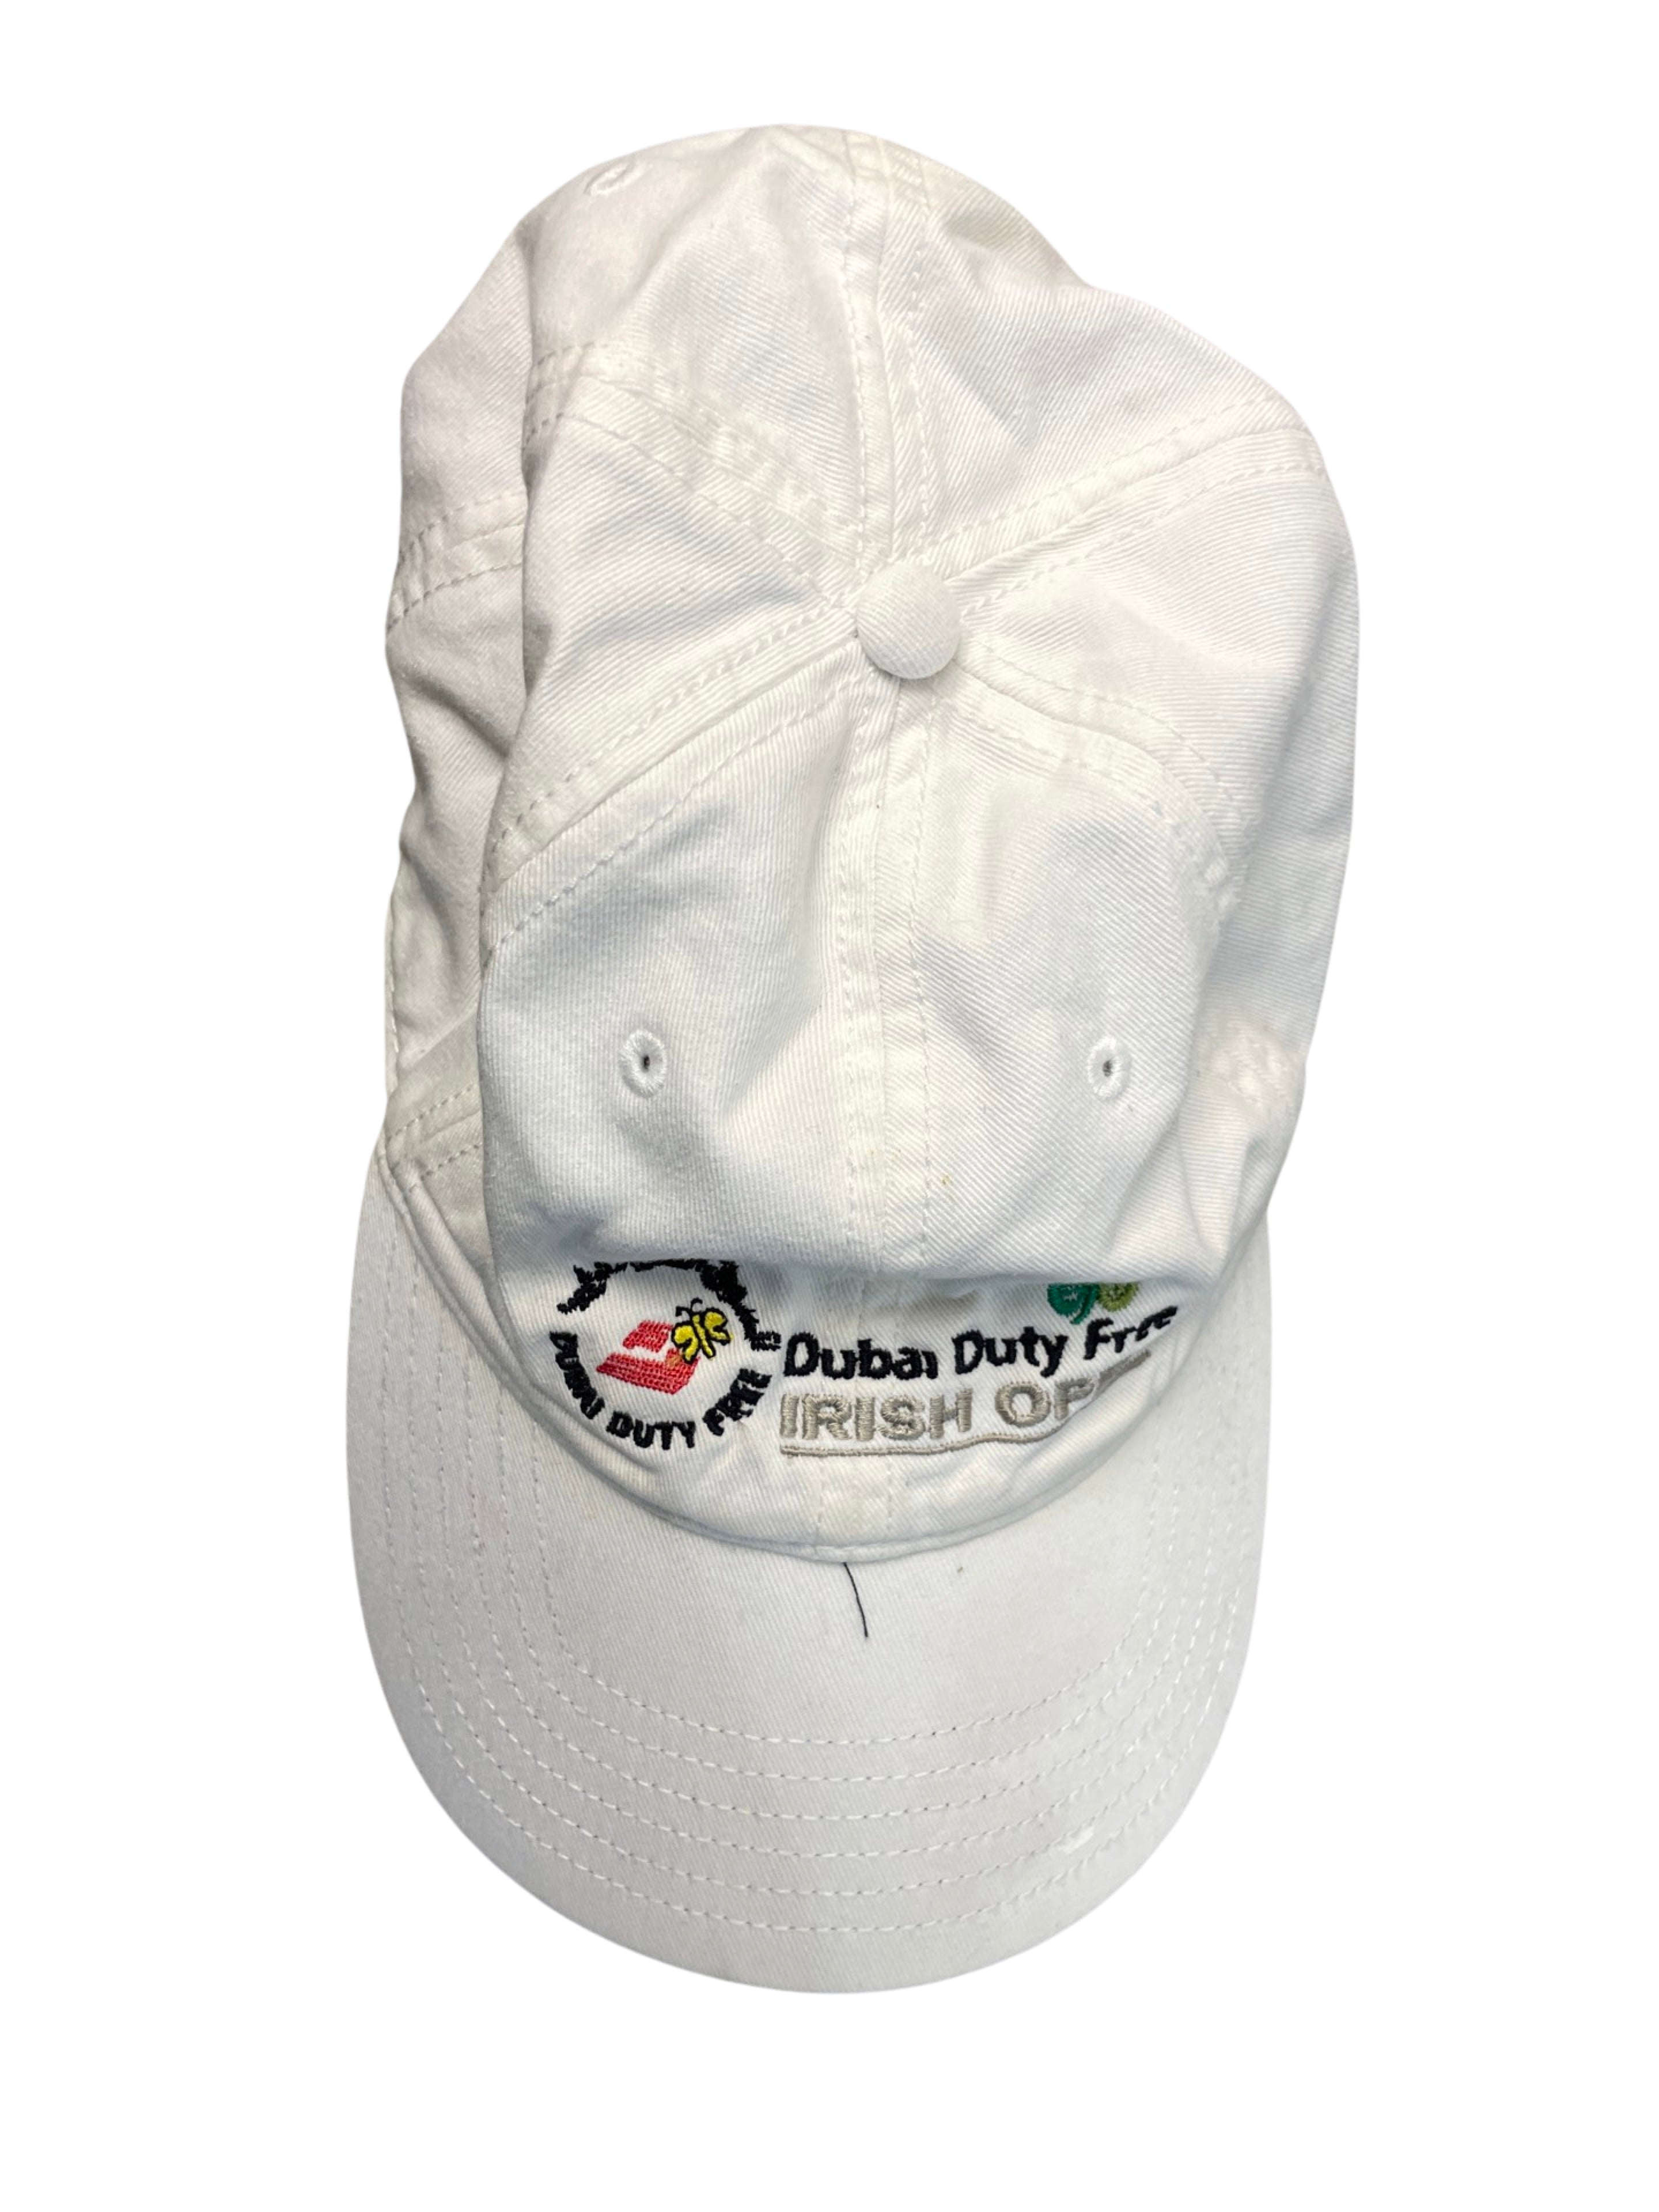 Rubynee Vintage y2k gold white cap with dubai duty free irish open crest design